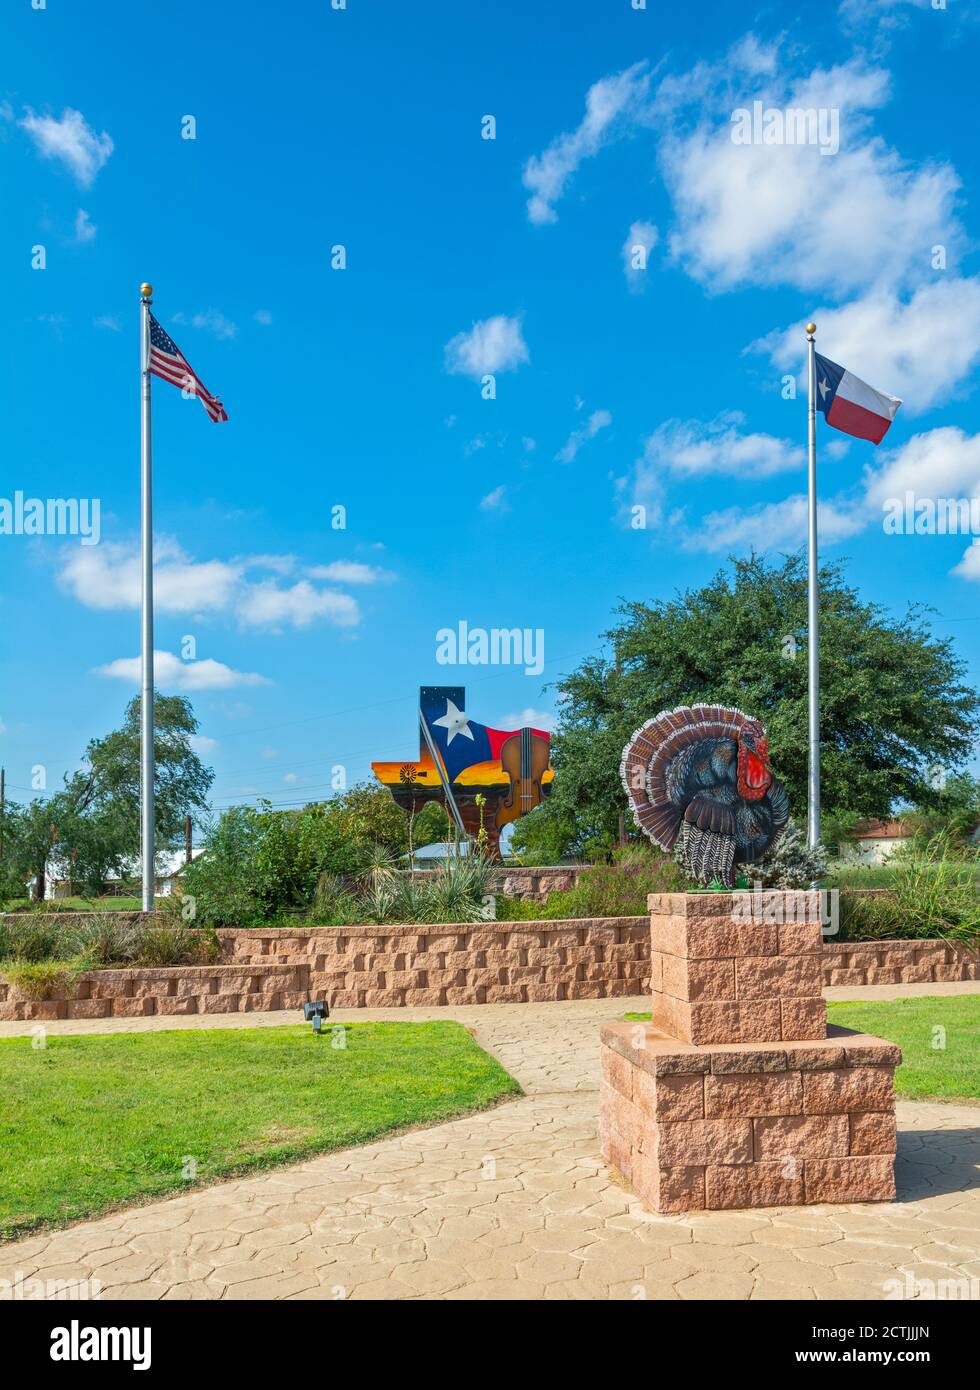 Texas, Hall County, Turkey, Welcome Plaza Stock Photo